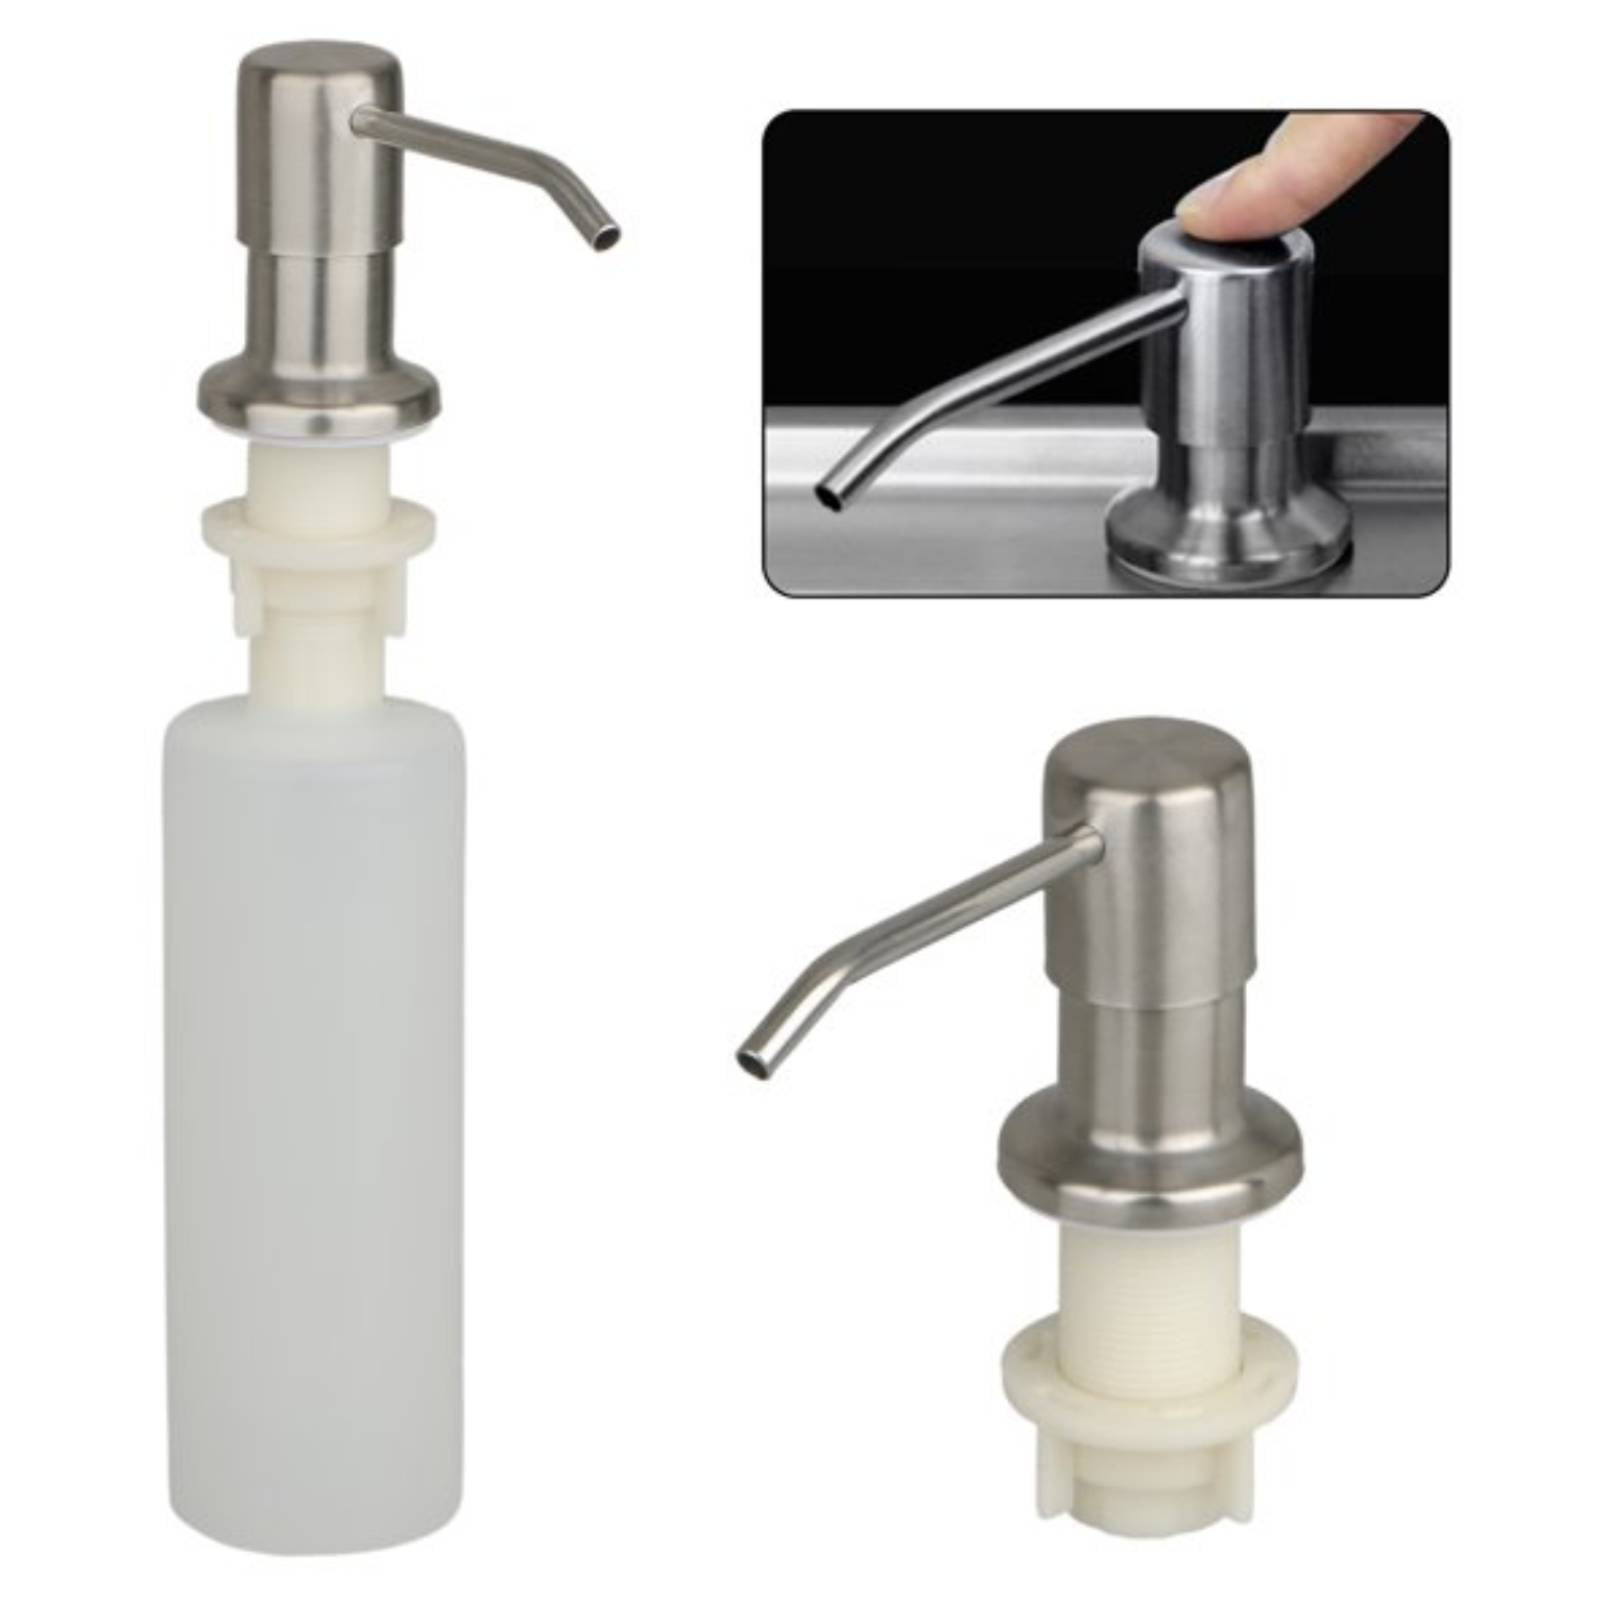 2020 DIY Soap Dispenser Pump & 47" Extension Tube Kit Fits Kitchen Sink Dishing